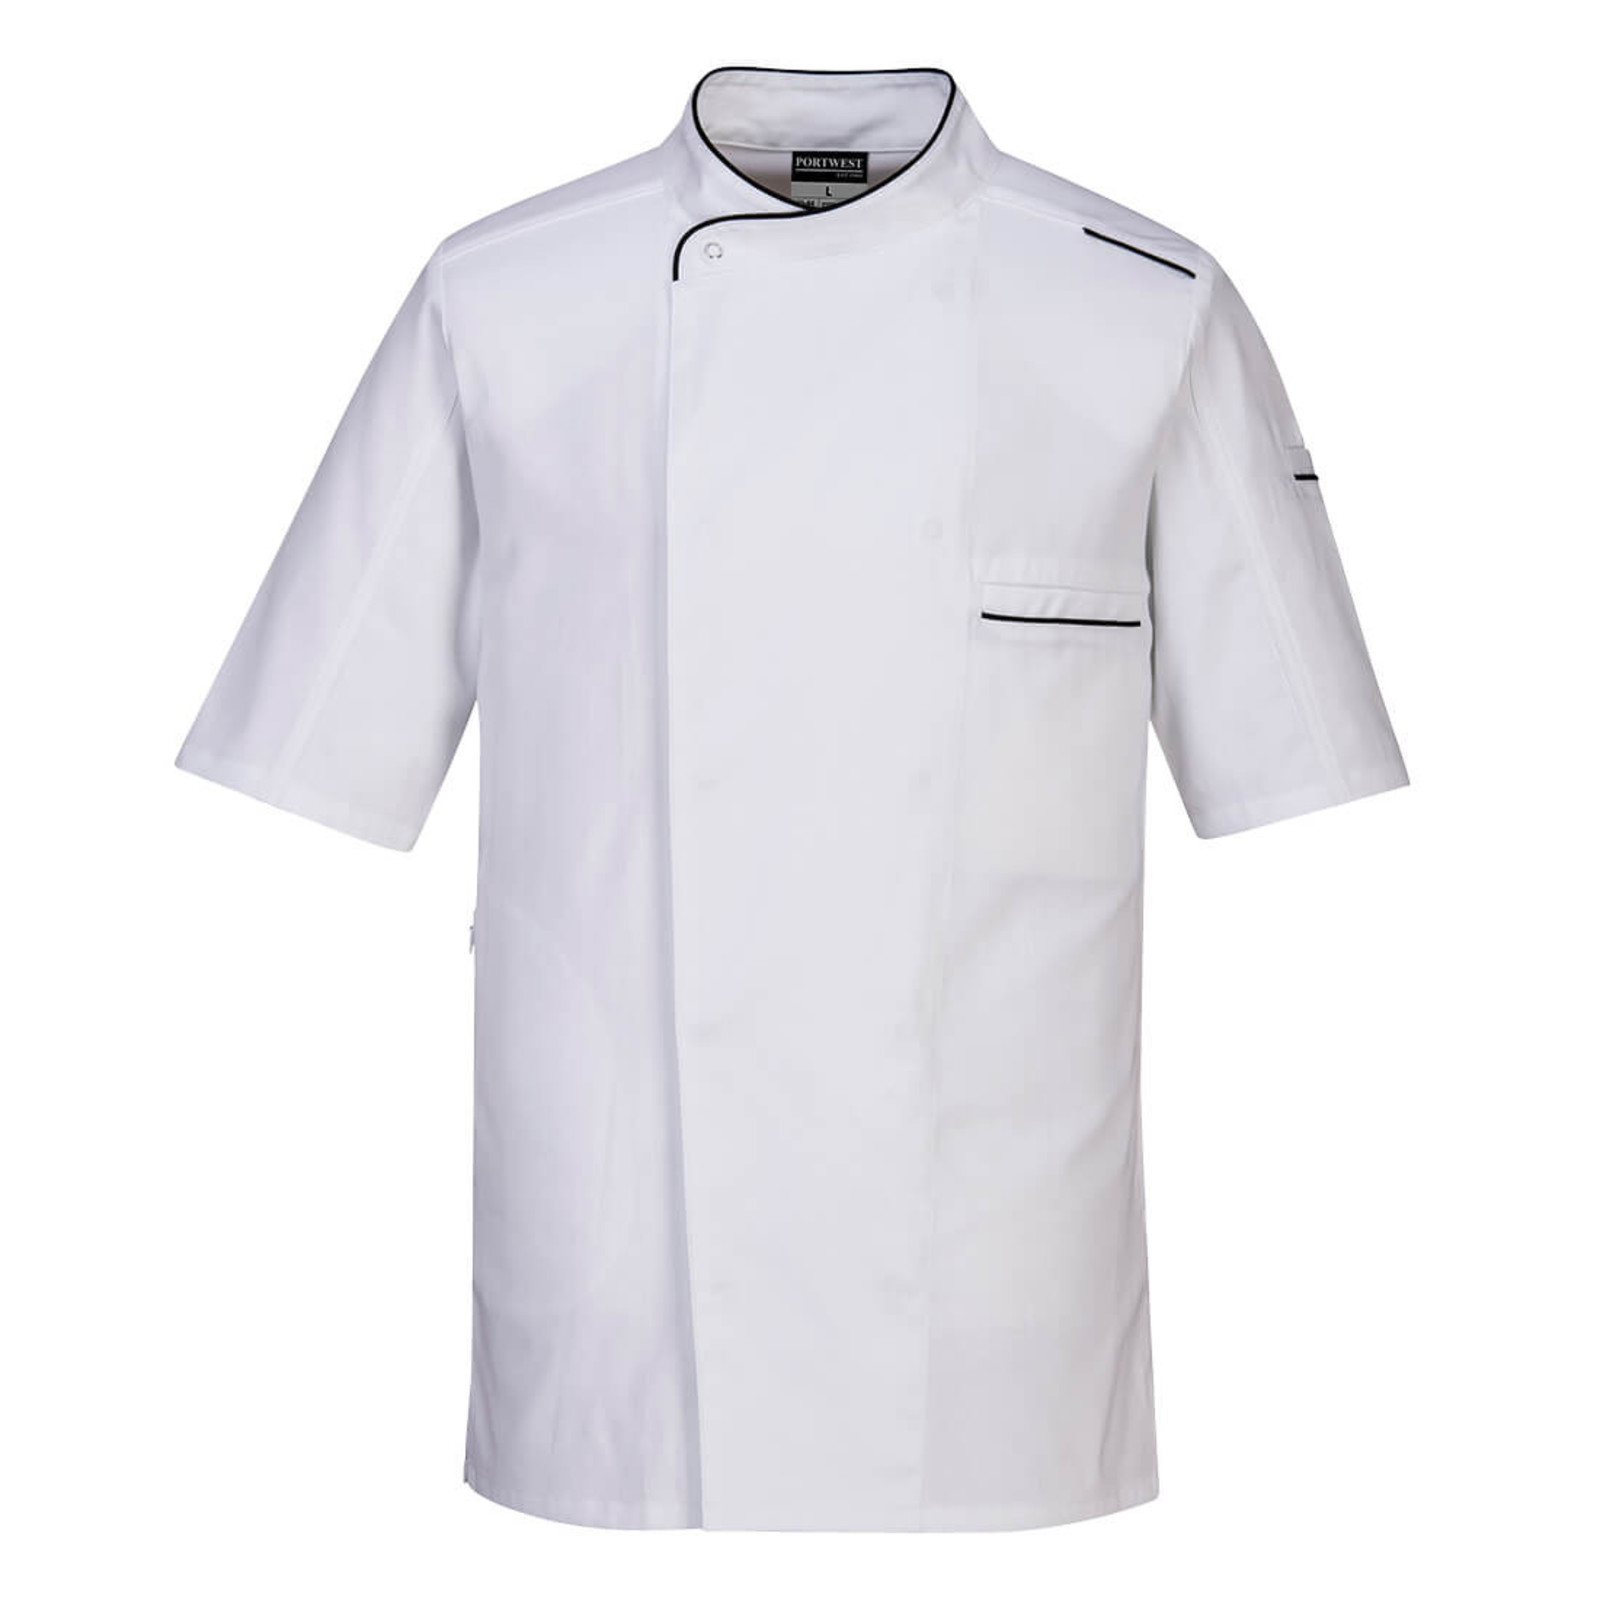 Kuchárska blúza Portwest Surrey Chefs S/S C735 - veľkosť: M, farba: biela